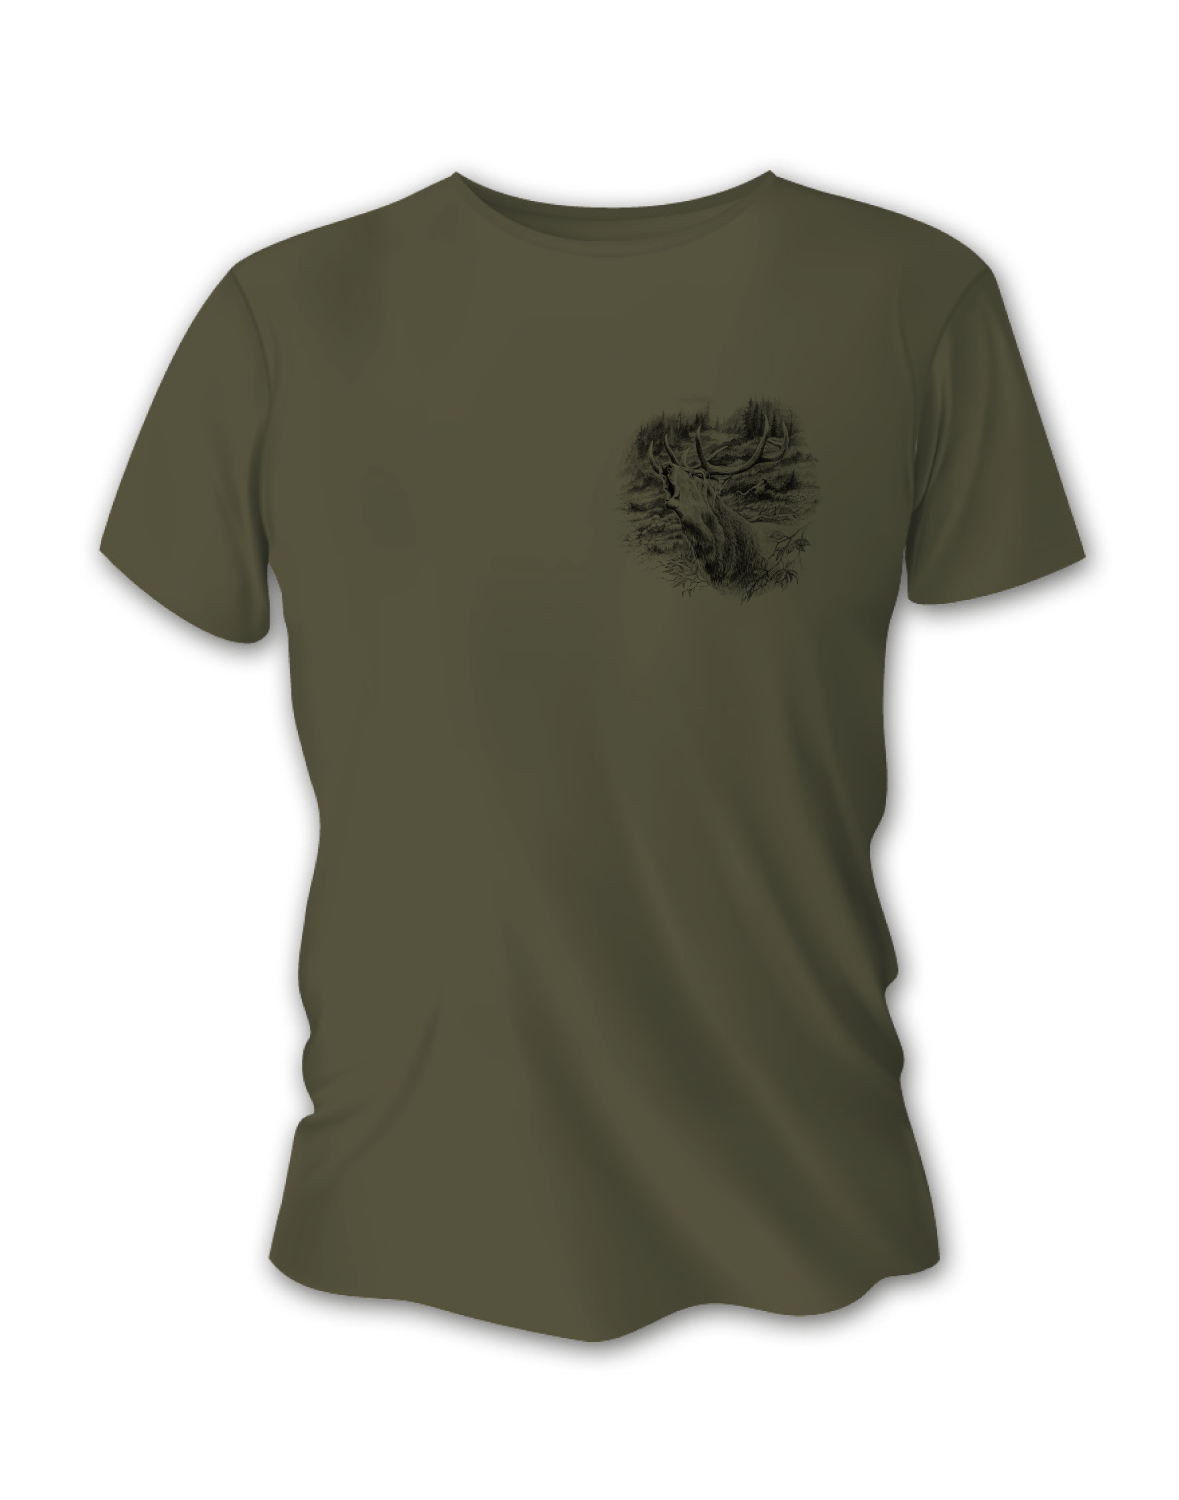 Pánske poľovnícke tričko TETRAO jeleň malý - zelené   XL